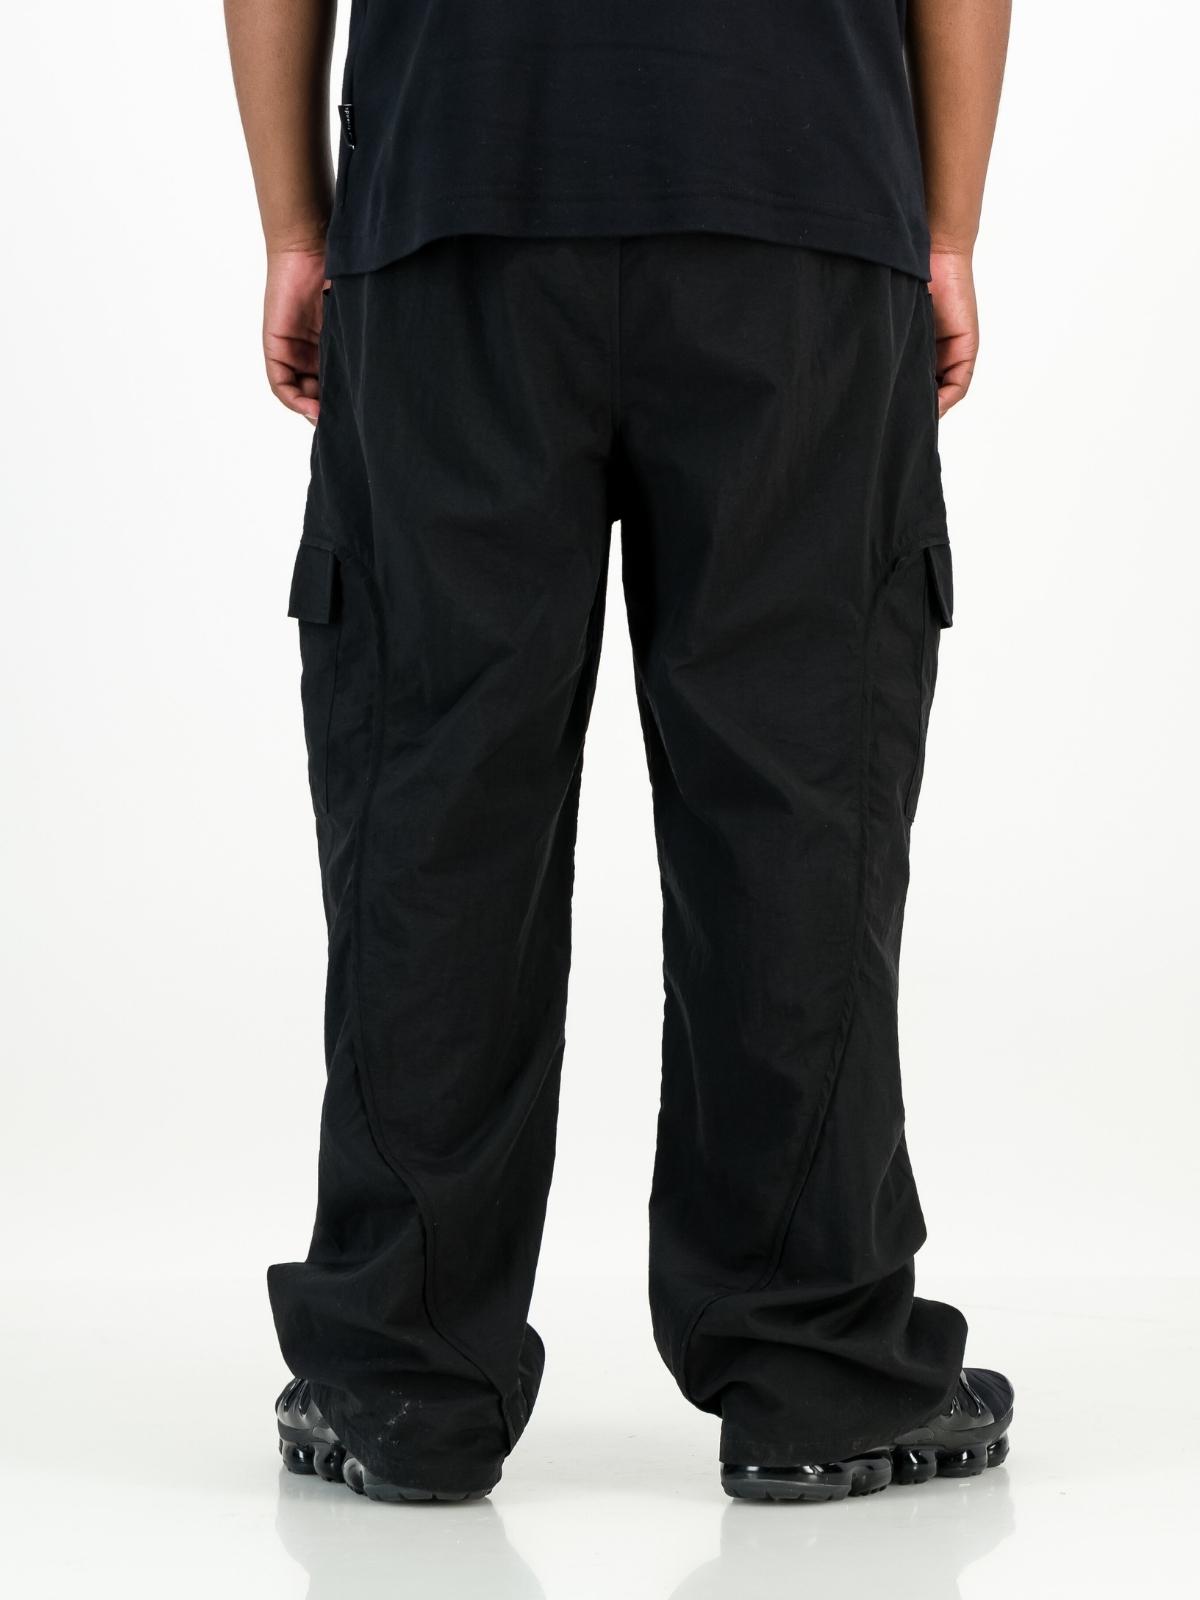 Engineered Trouser - Black